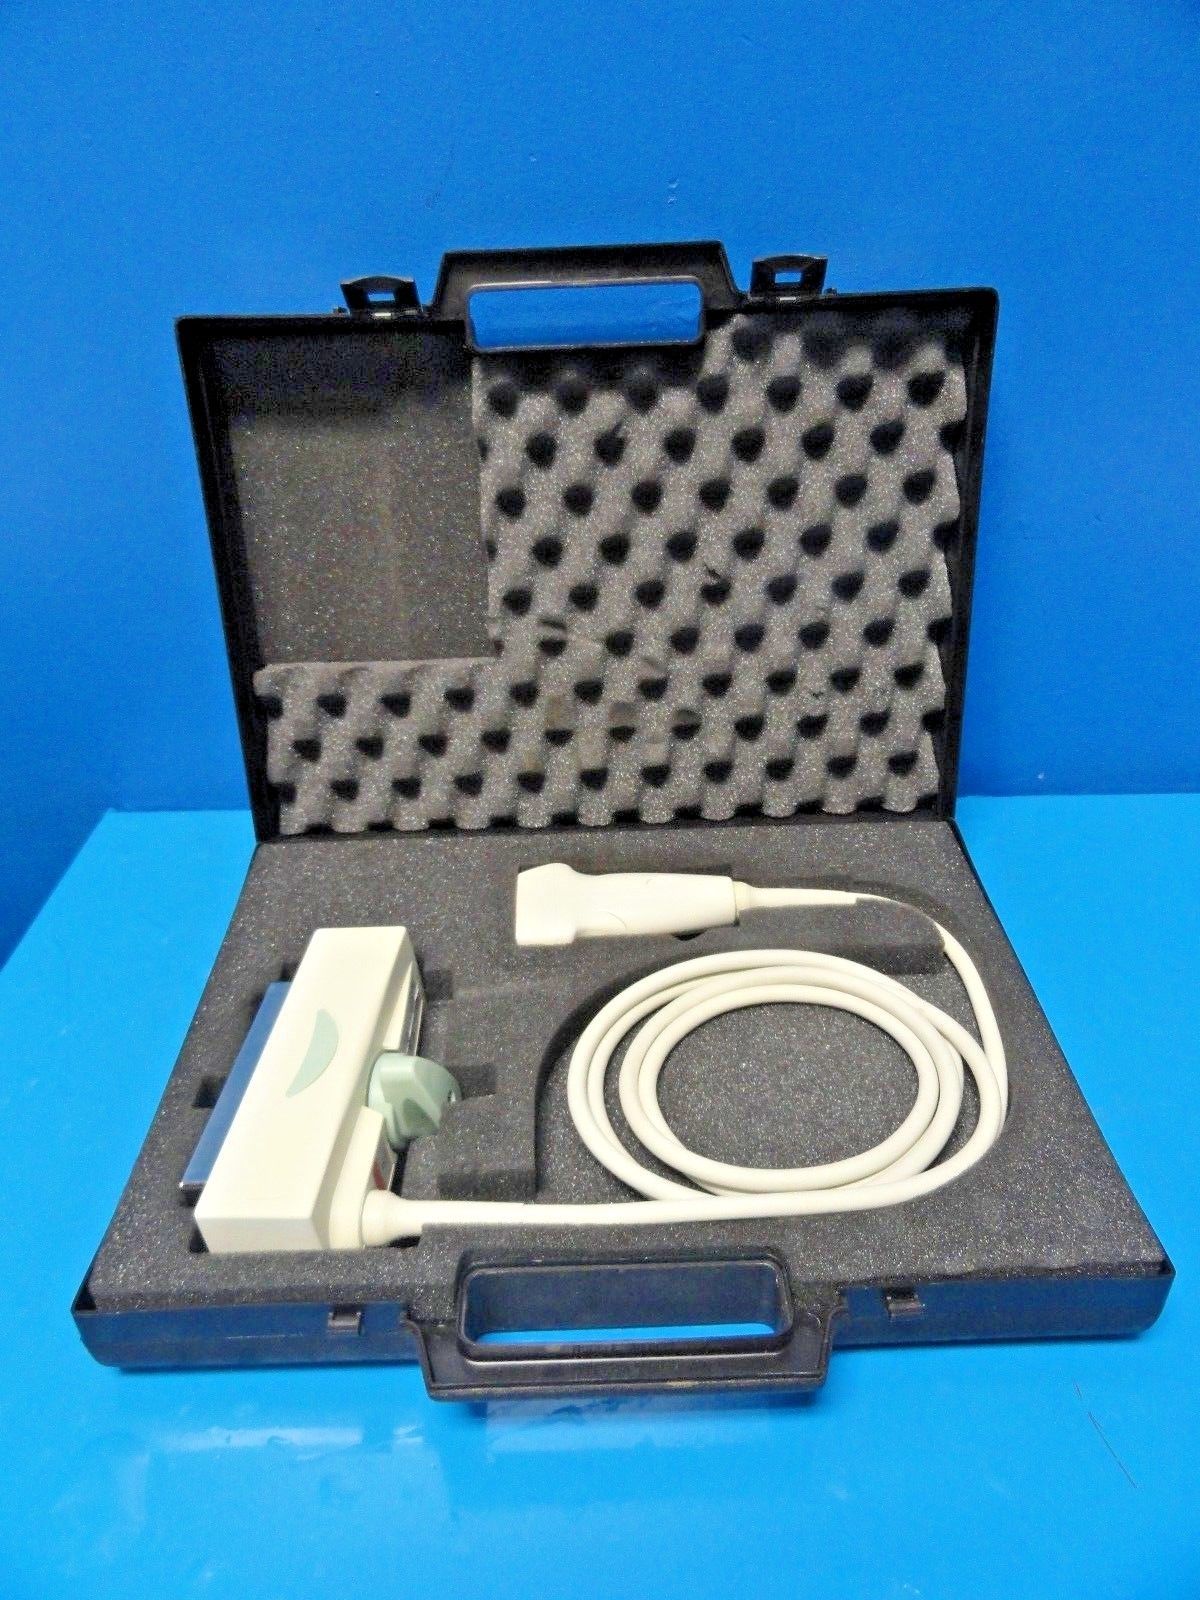 Biosound ESAOTE LA522E Linear Array Ultrasound Transducer W/ Case~14899 DIAGNOSTIC ULTRASOUND MACHINES FOR SALE